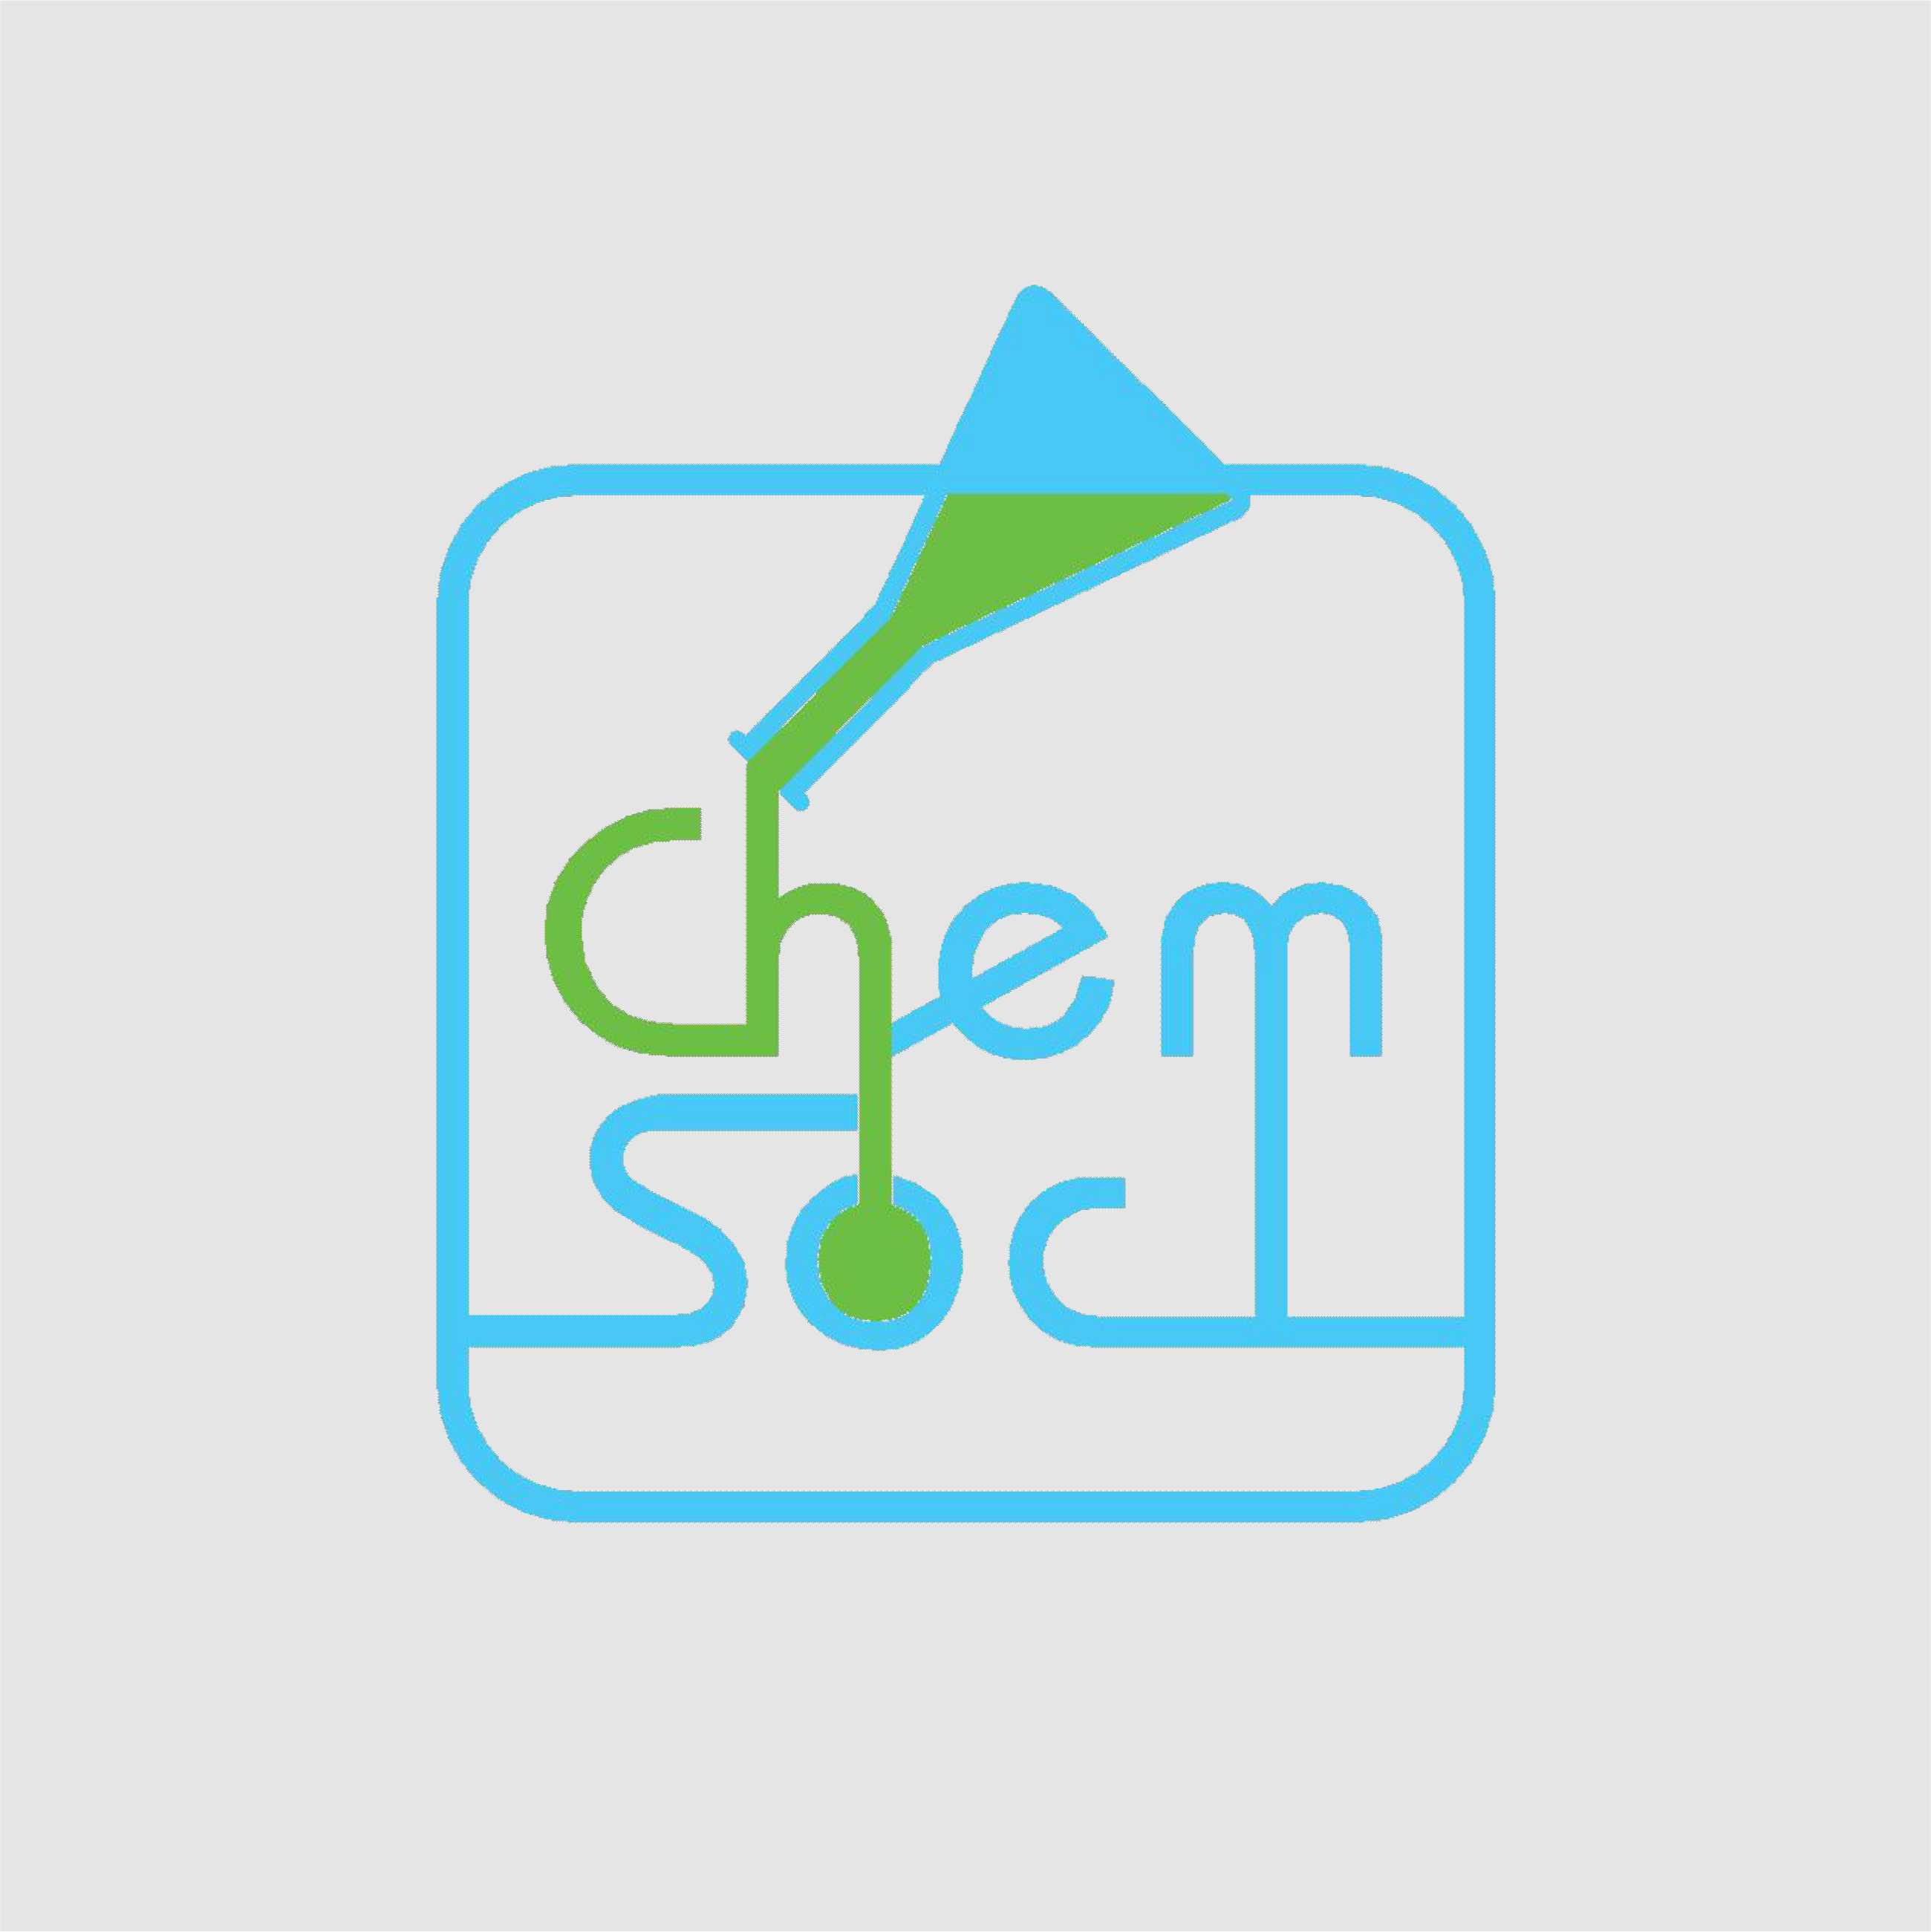 web logos Chemsoc.jpg